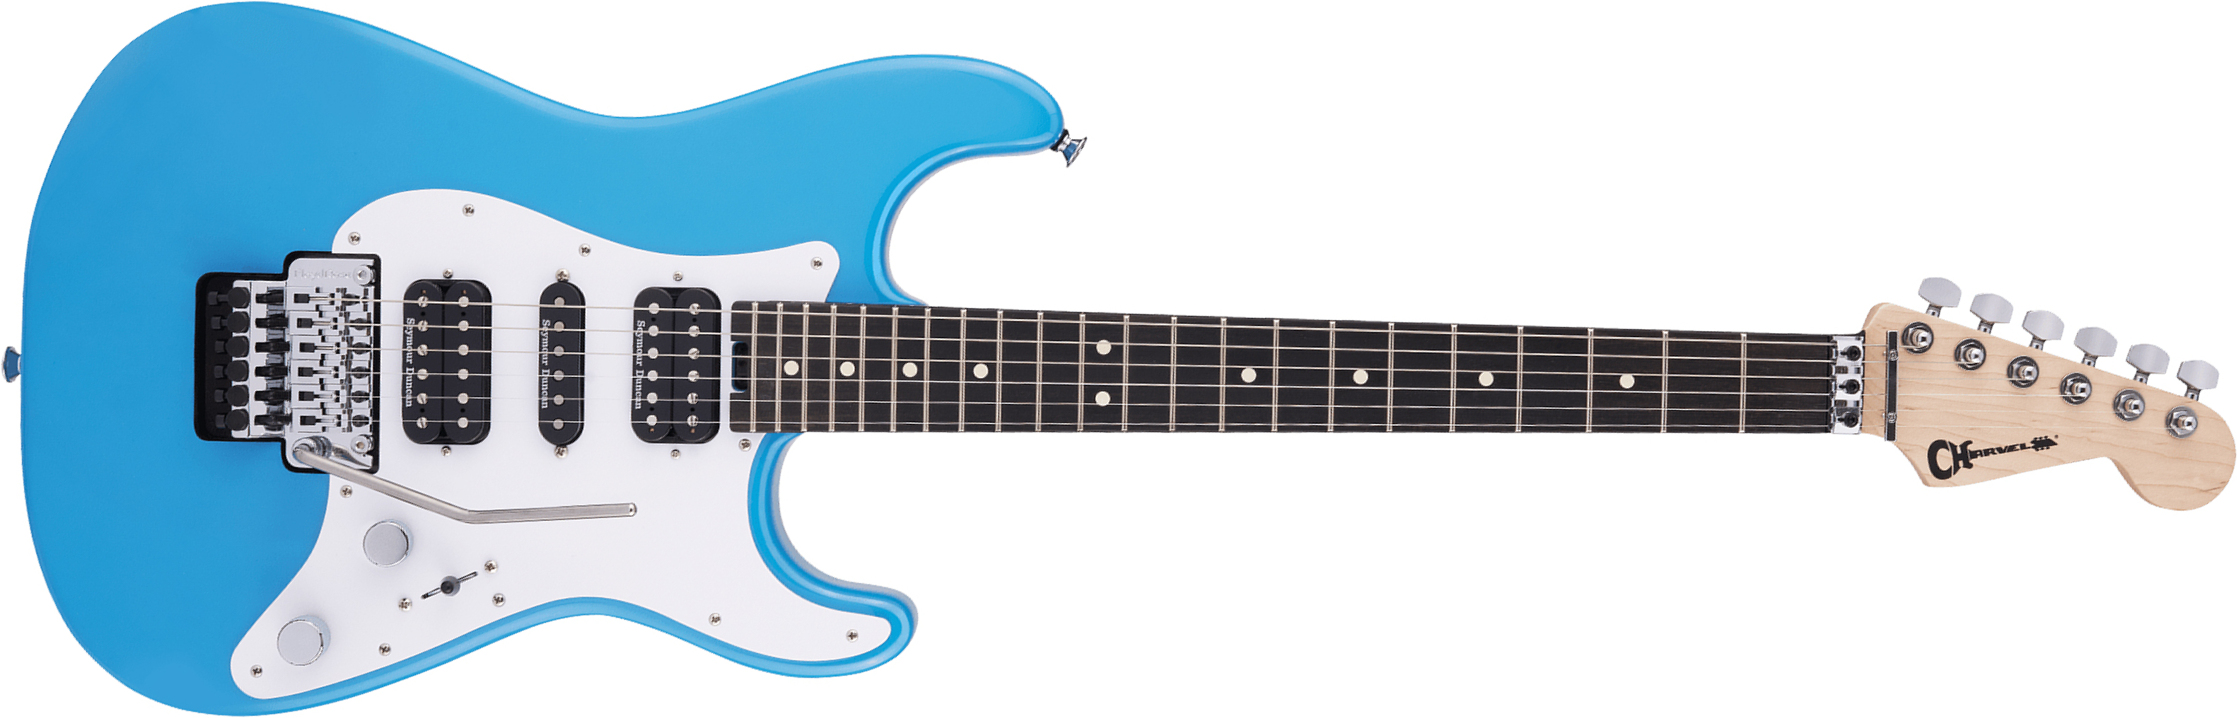 Charvel So-cal Style 1 Hsh Fr E Pro-mod Seymour Duncan Eb - Robbin's Egg Blue - Elektrische gitaar in Str-vorm - Main picture